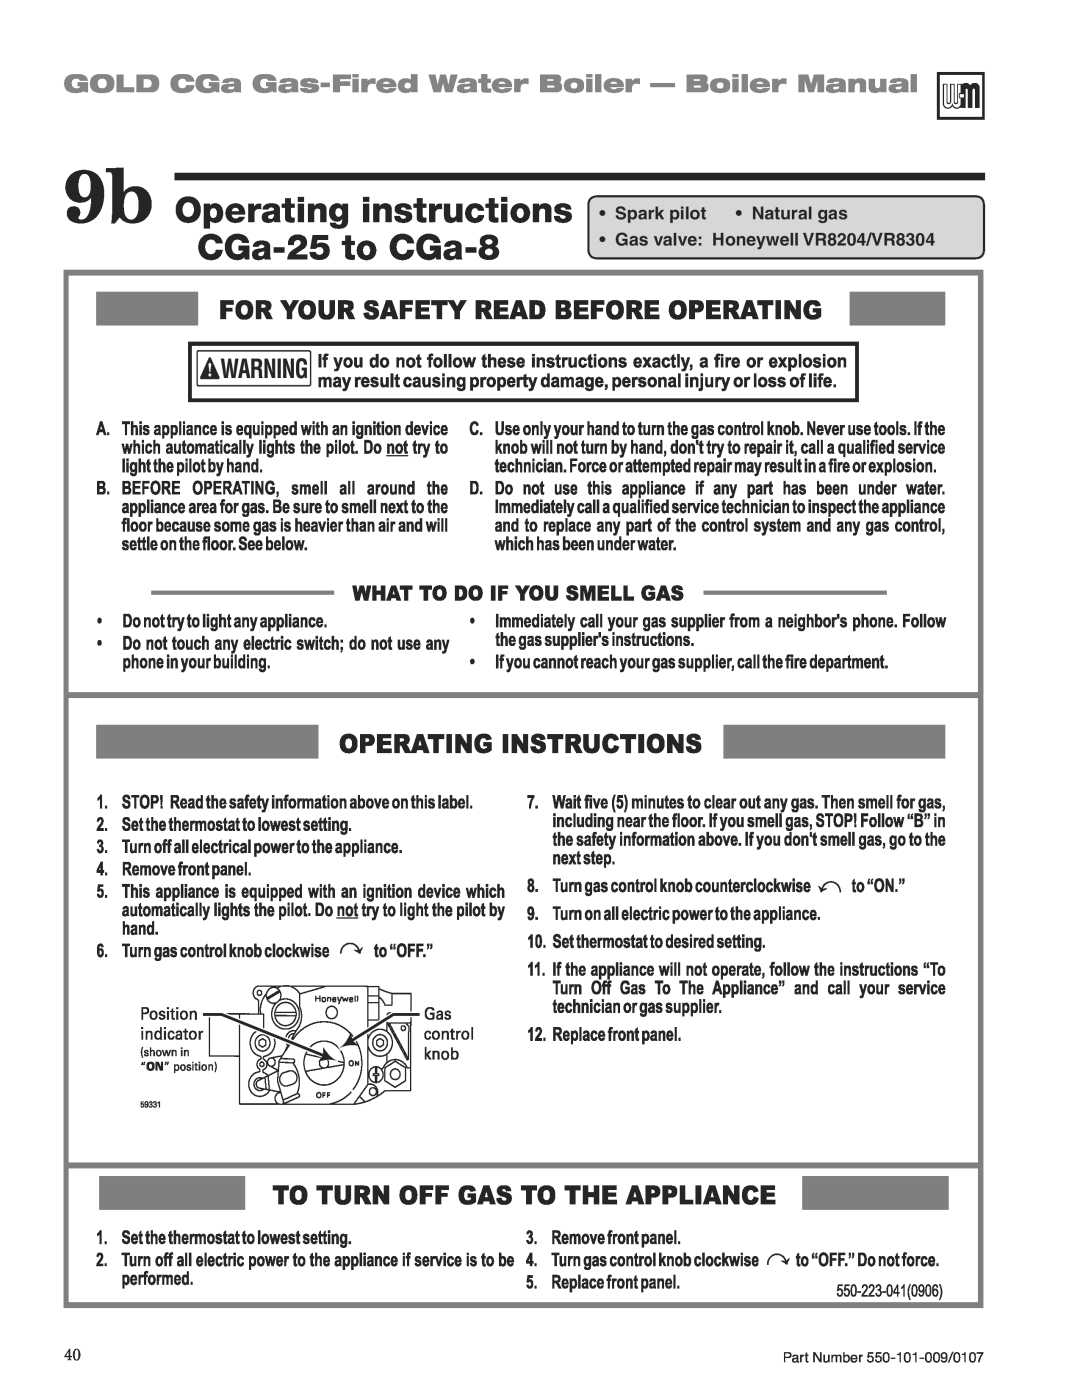 Weil-McLain CGA25SPDN manual 9b Operating instructions CGa-25to CGa-8, GOLD CGa Gas-FiredWater Boiler - Boiler Manual 